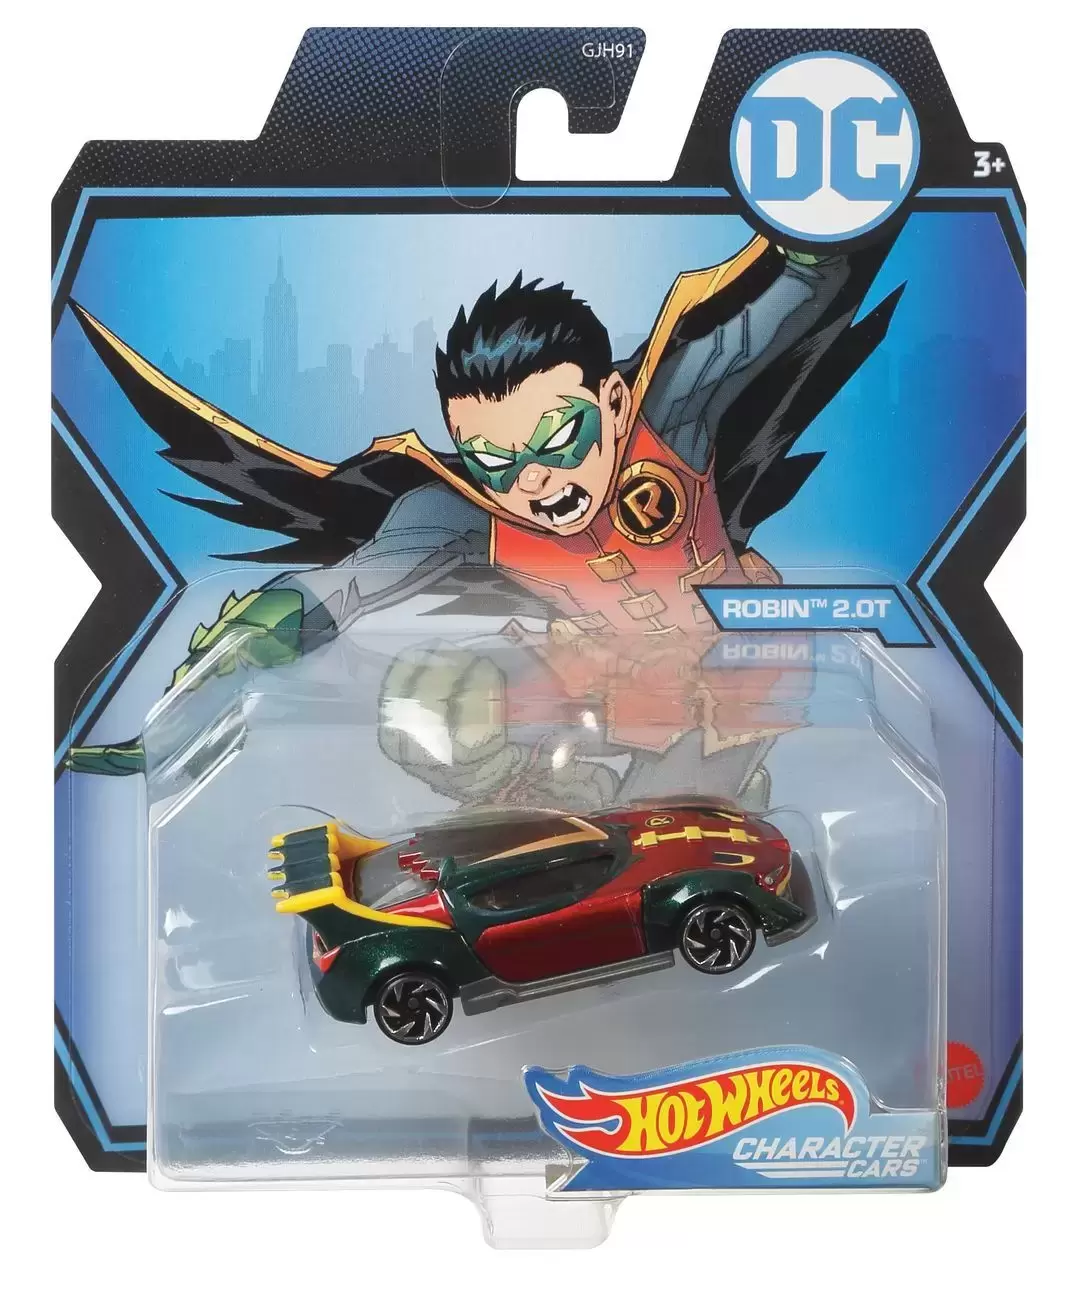 DC Comics Character Cars - Robin 2.0T